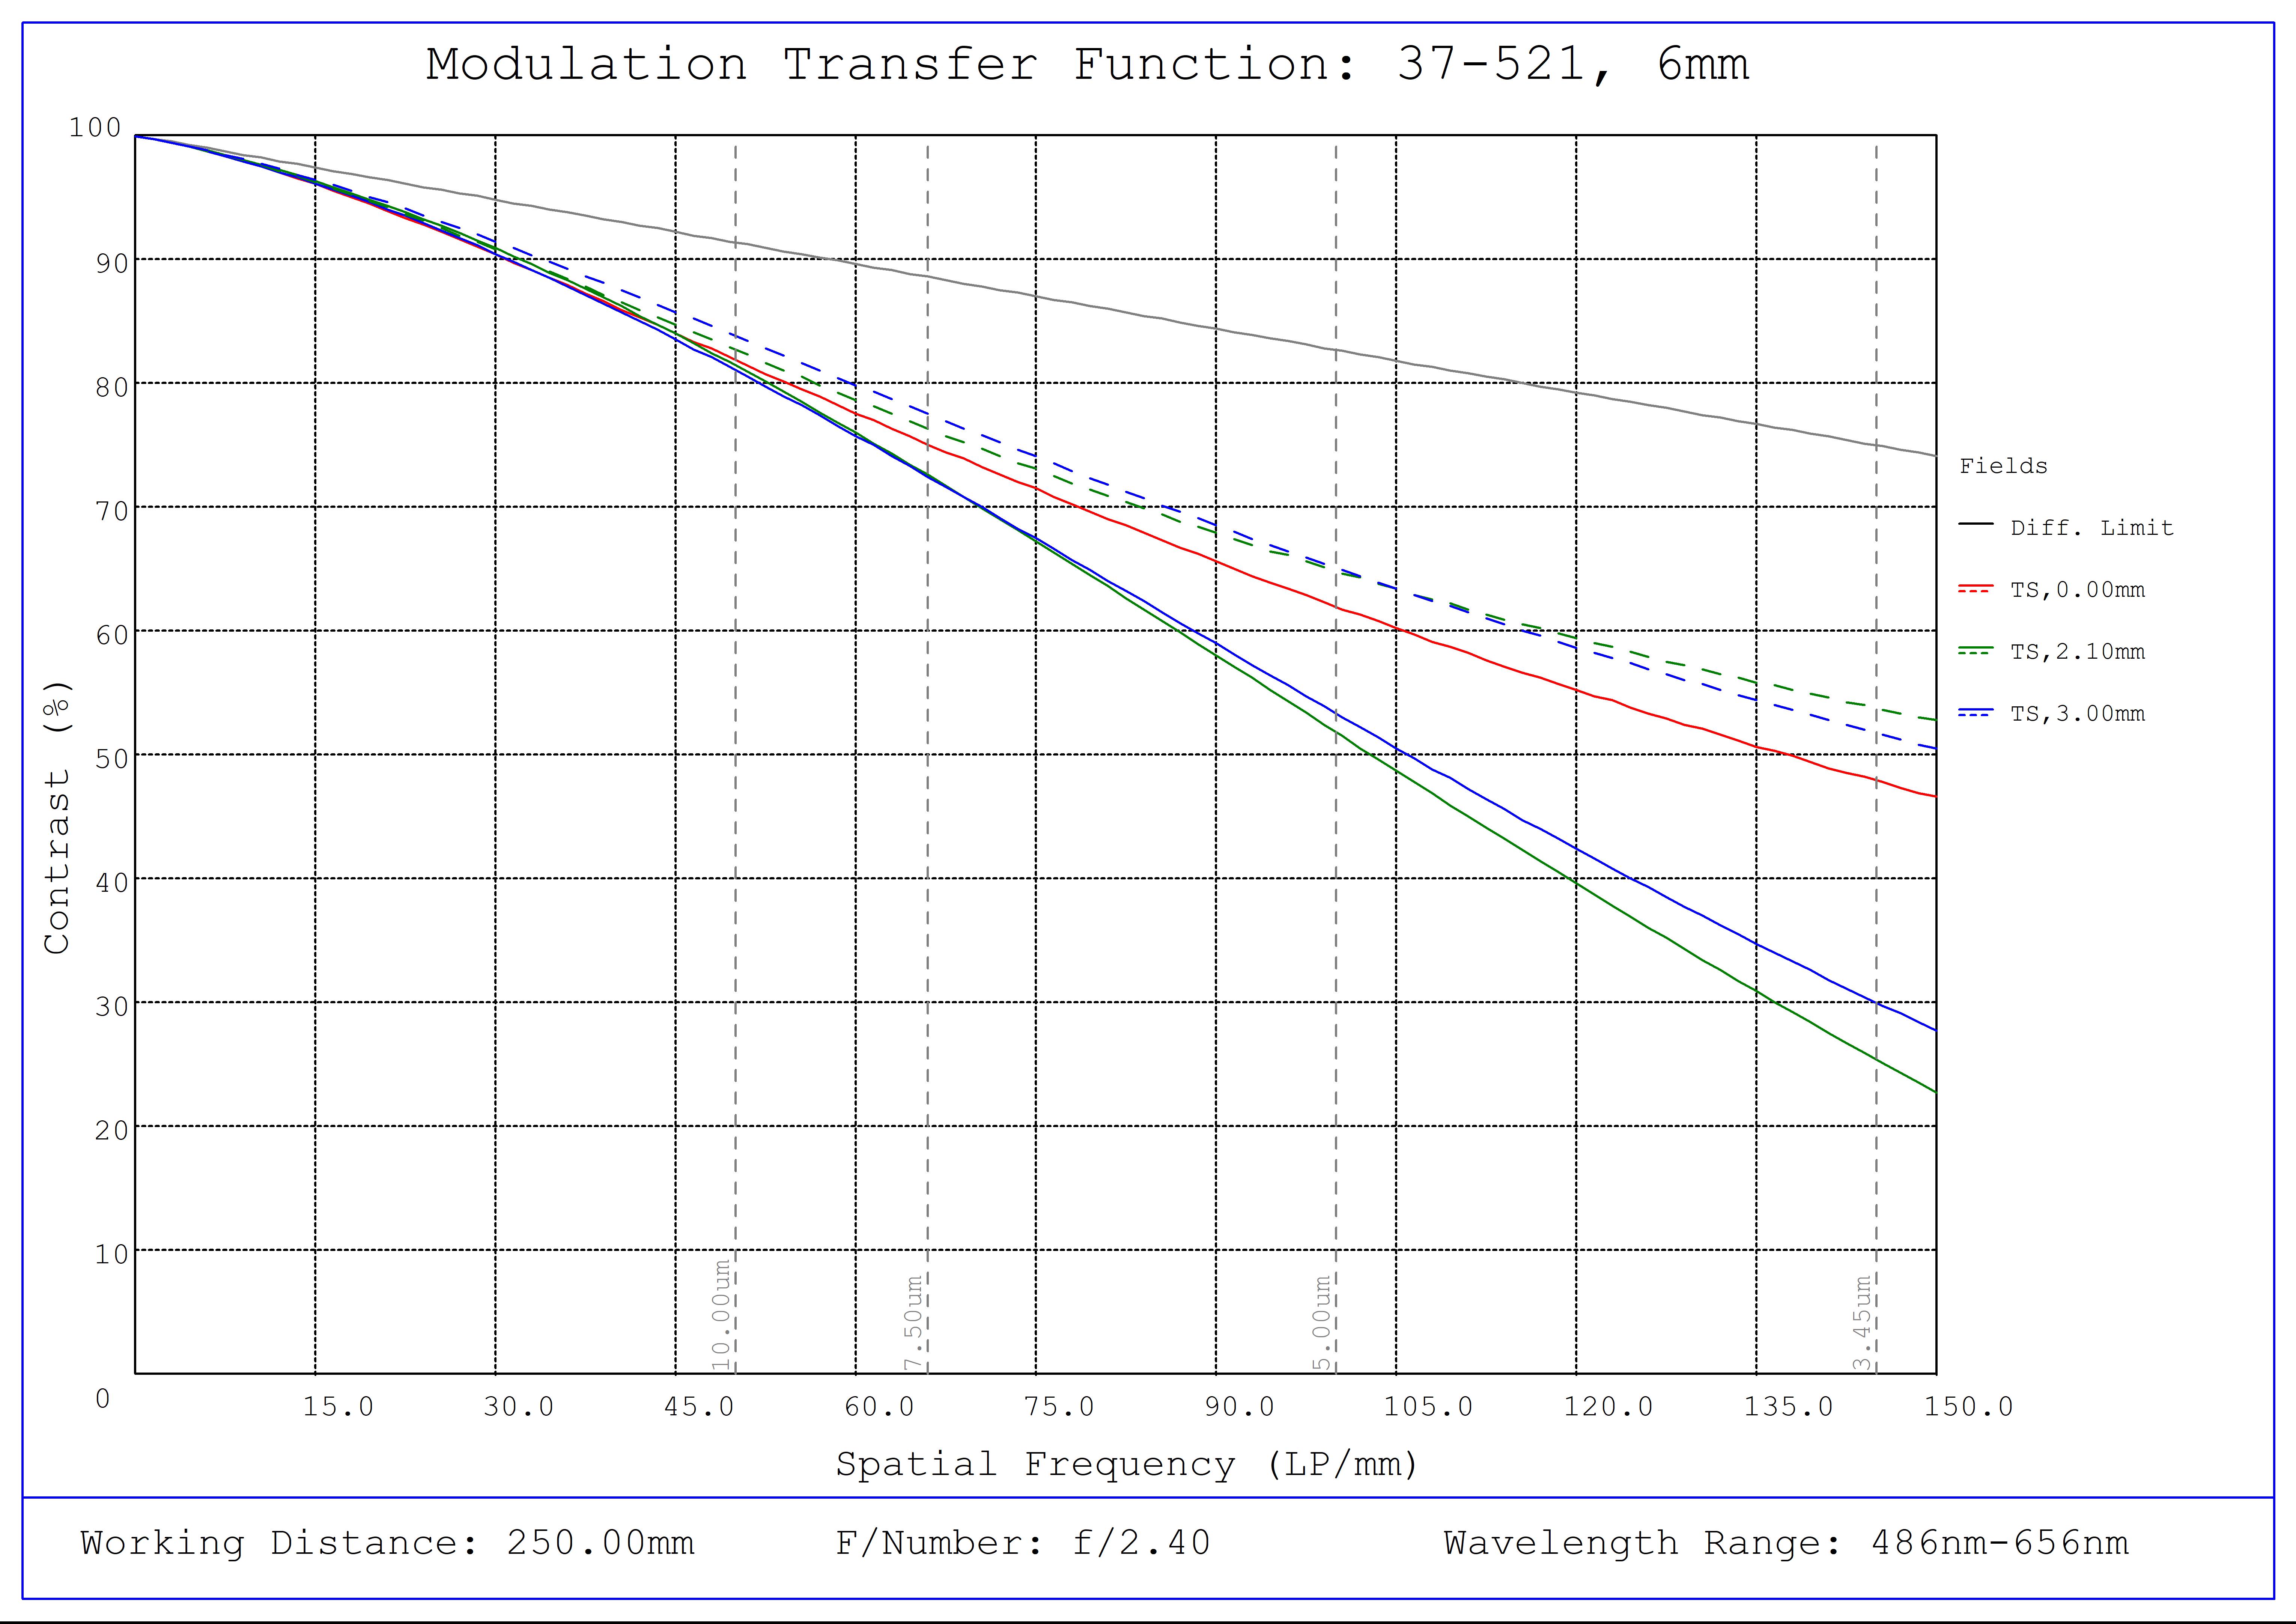 #37-521, 6mm FL, Liquid Lens M12 Lens, Modulated Transfer Function (MTF) Plot, 250mm Working Distance, f2.4